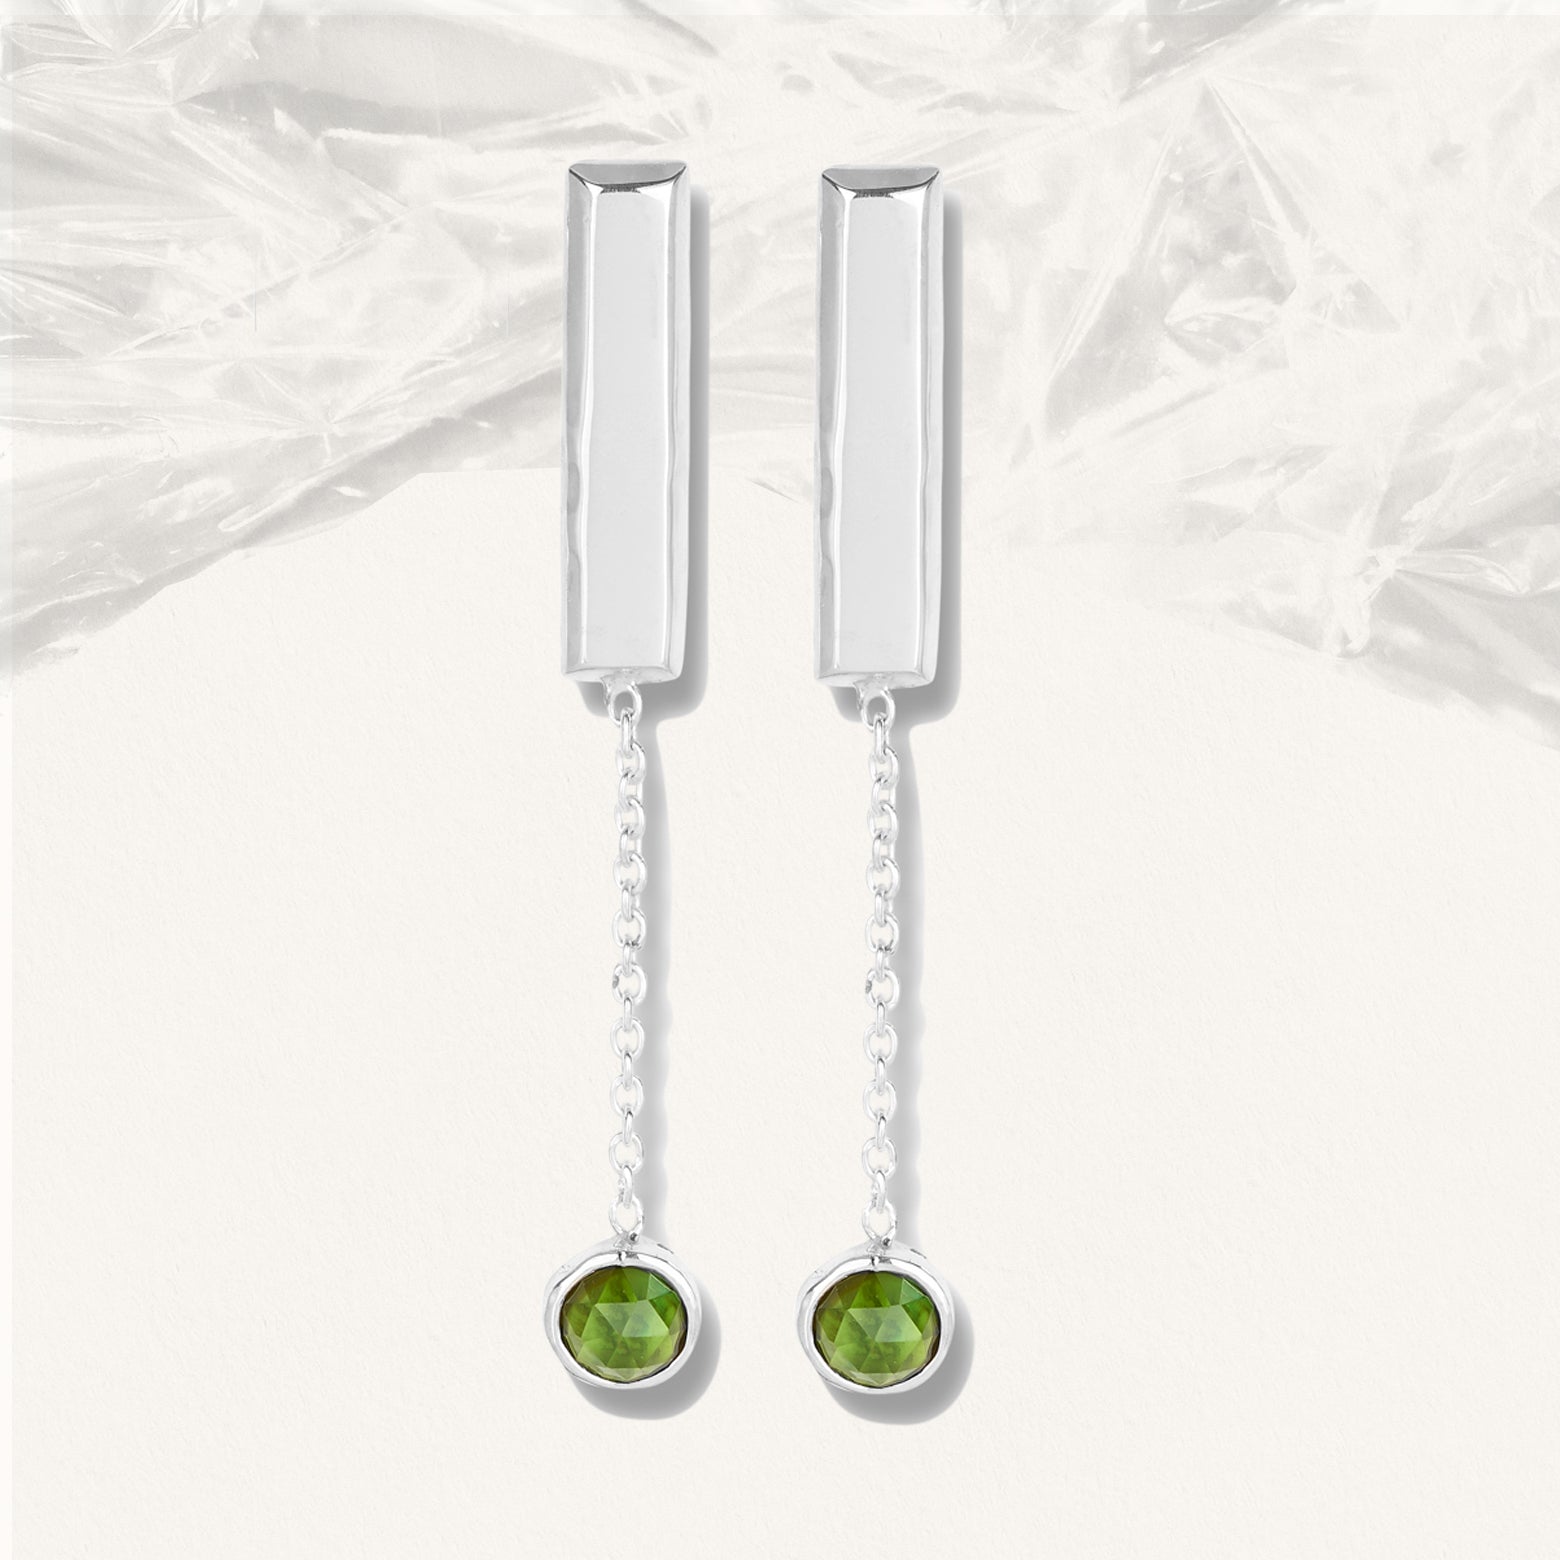 Sterling silver bar earrings with green tourmaline drop